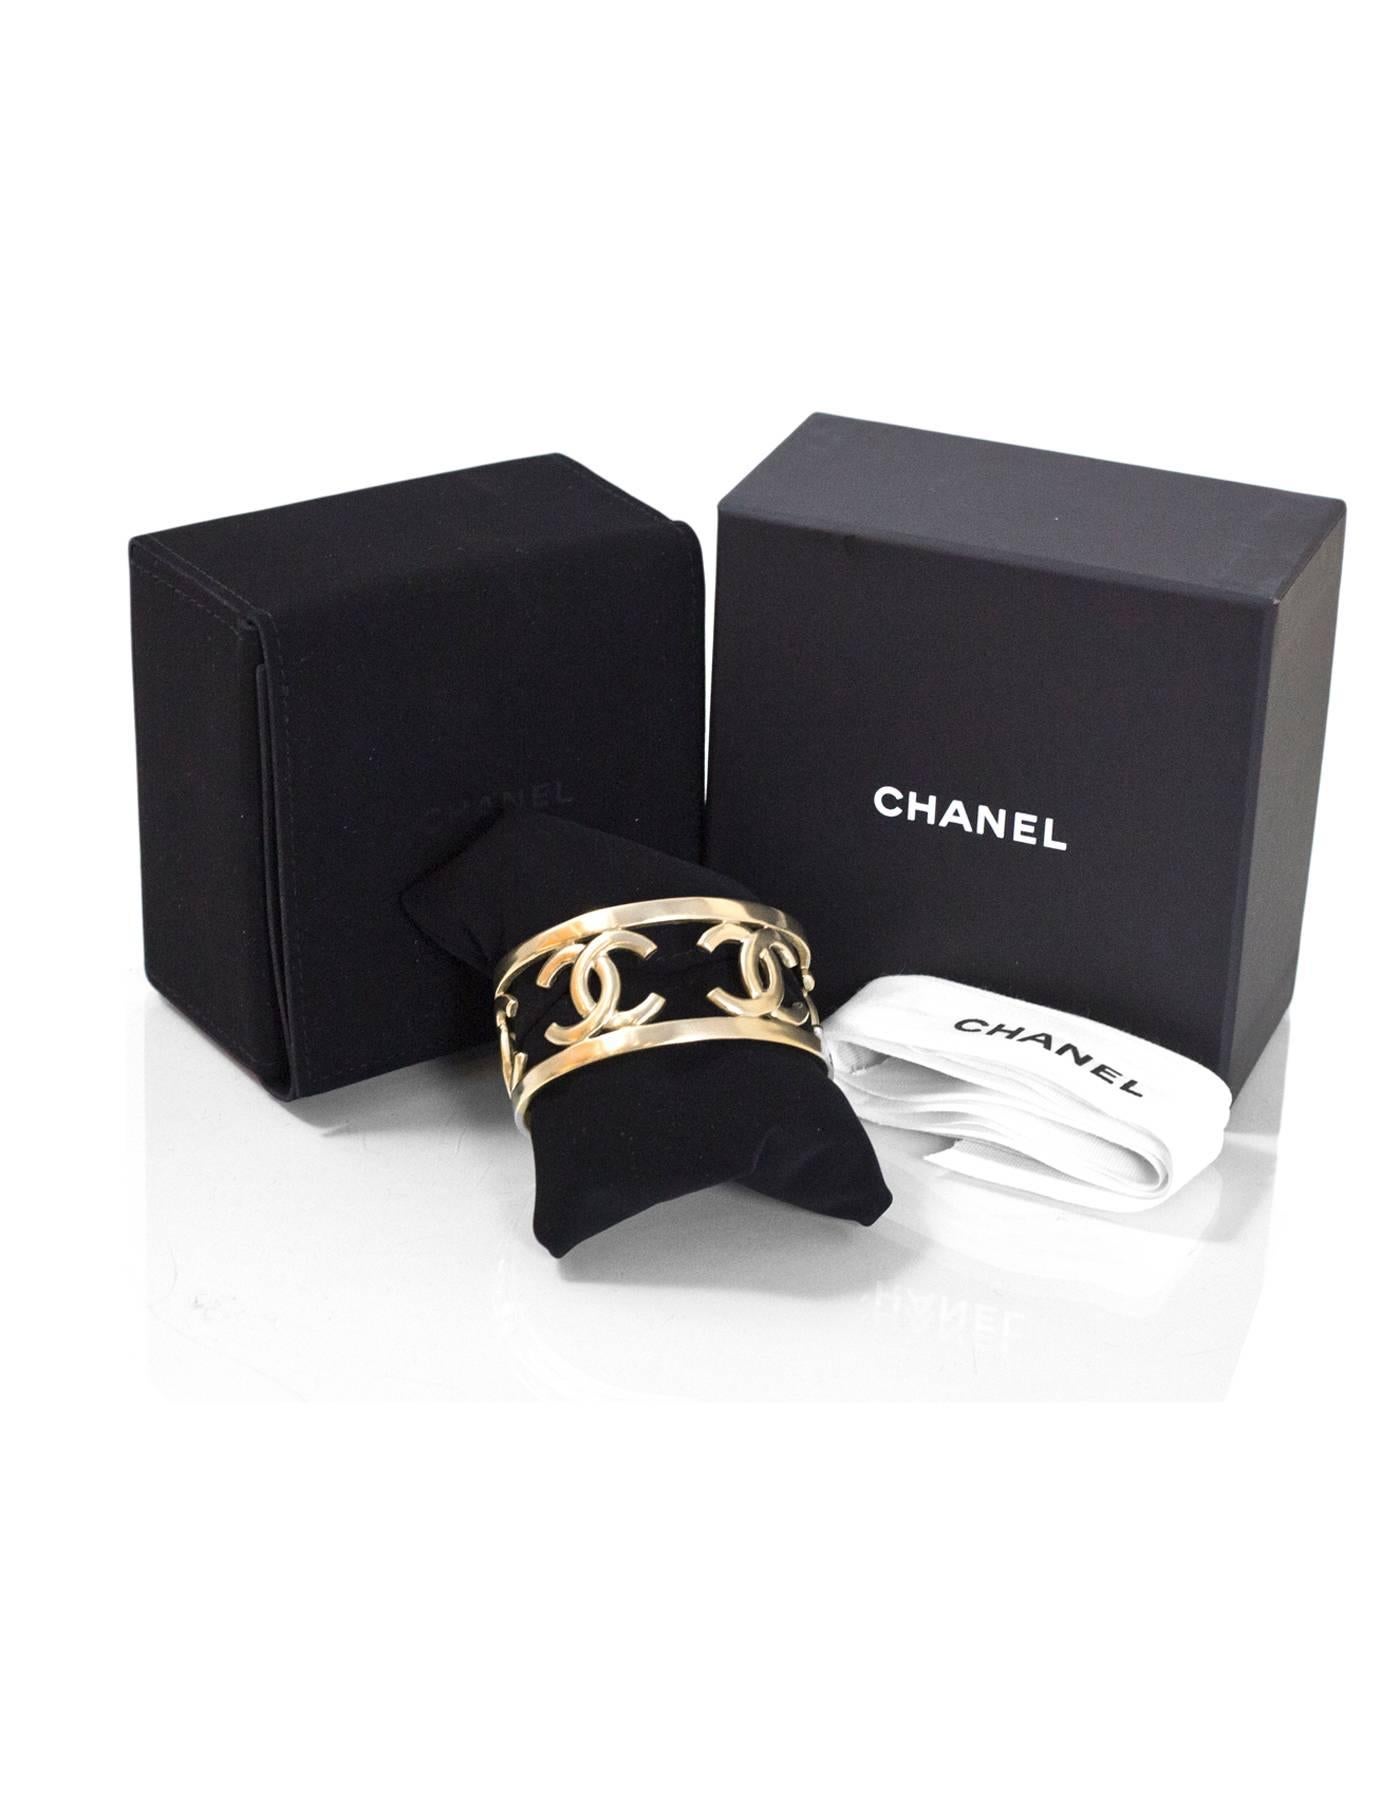 Chanel 2016 Light Goldtone CC Cuff Bracelet with Box 2